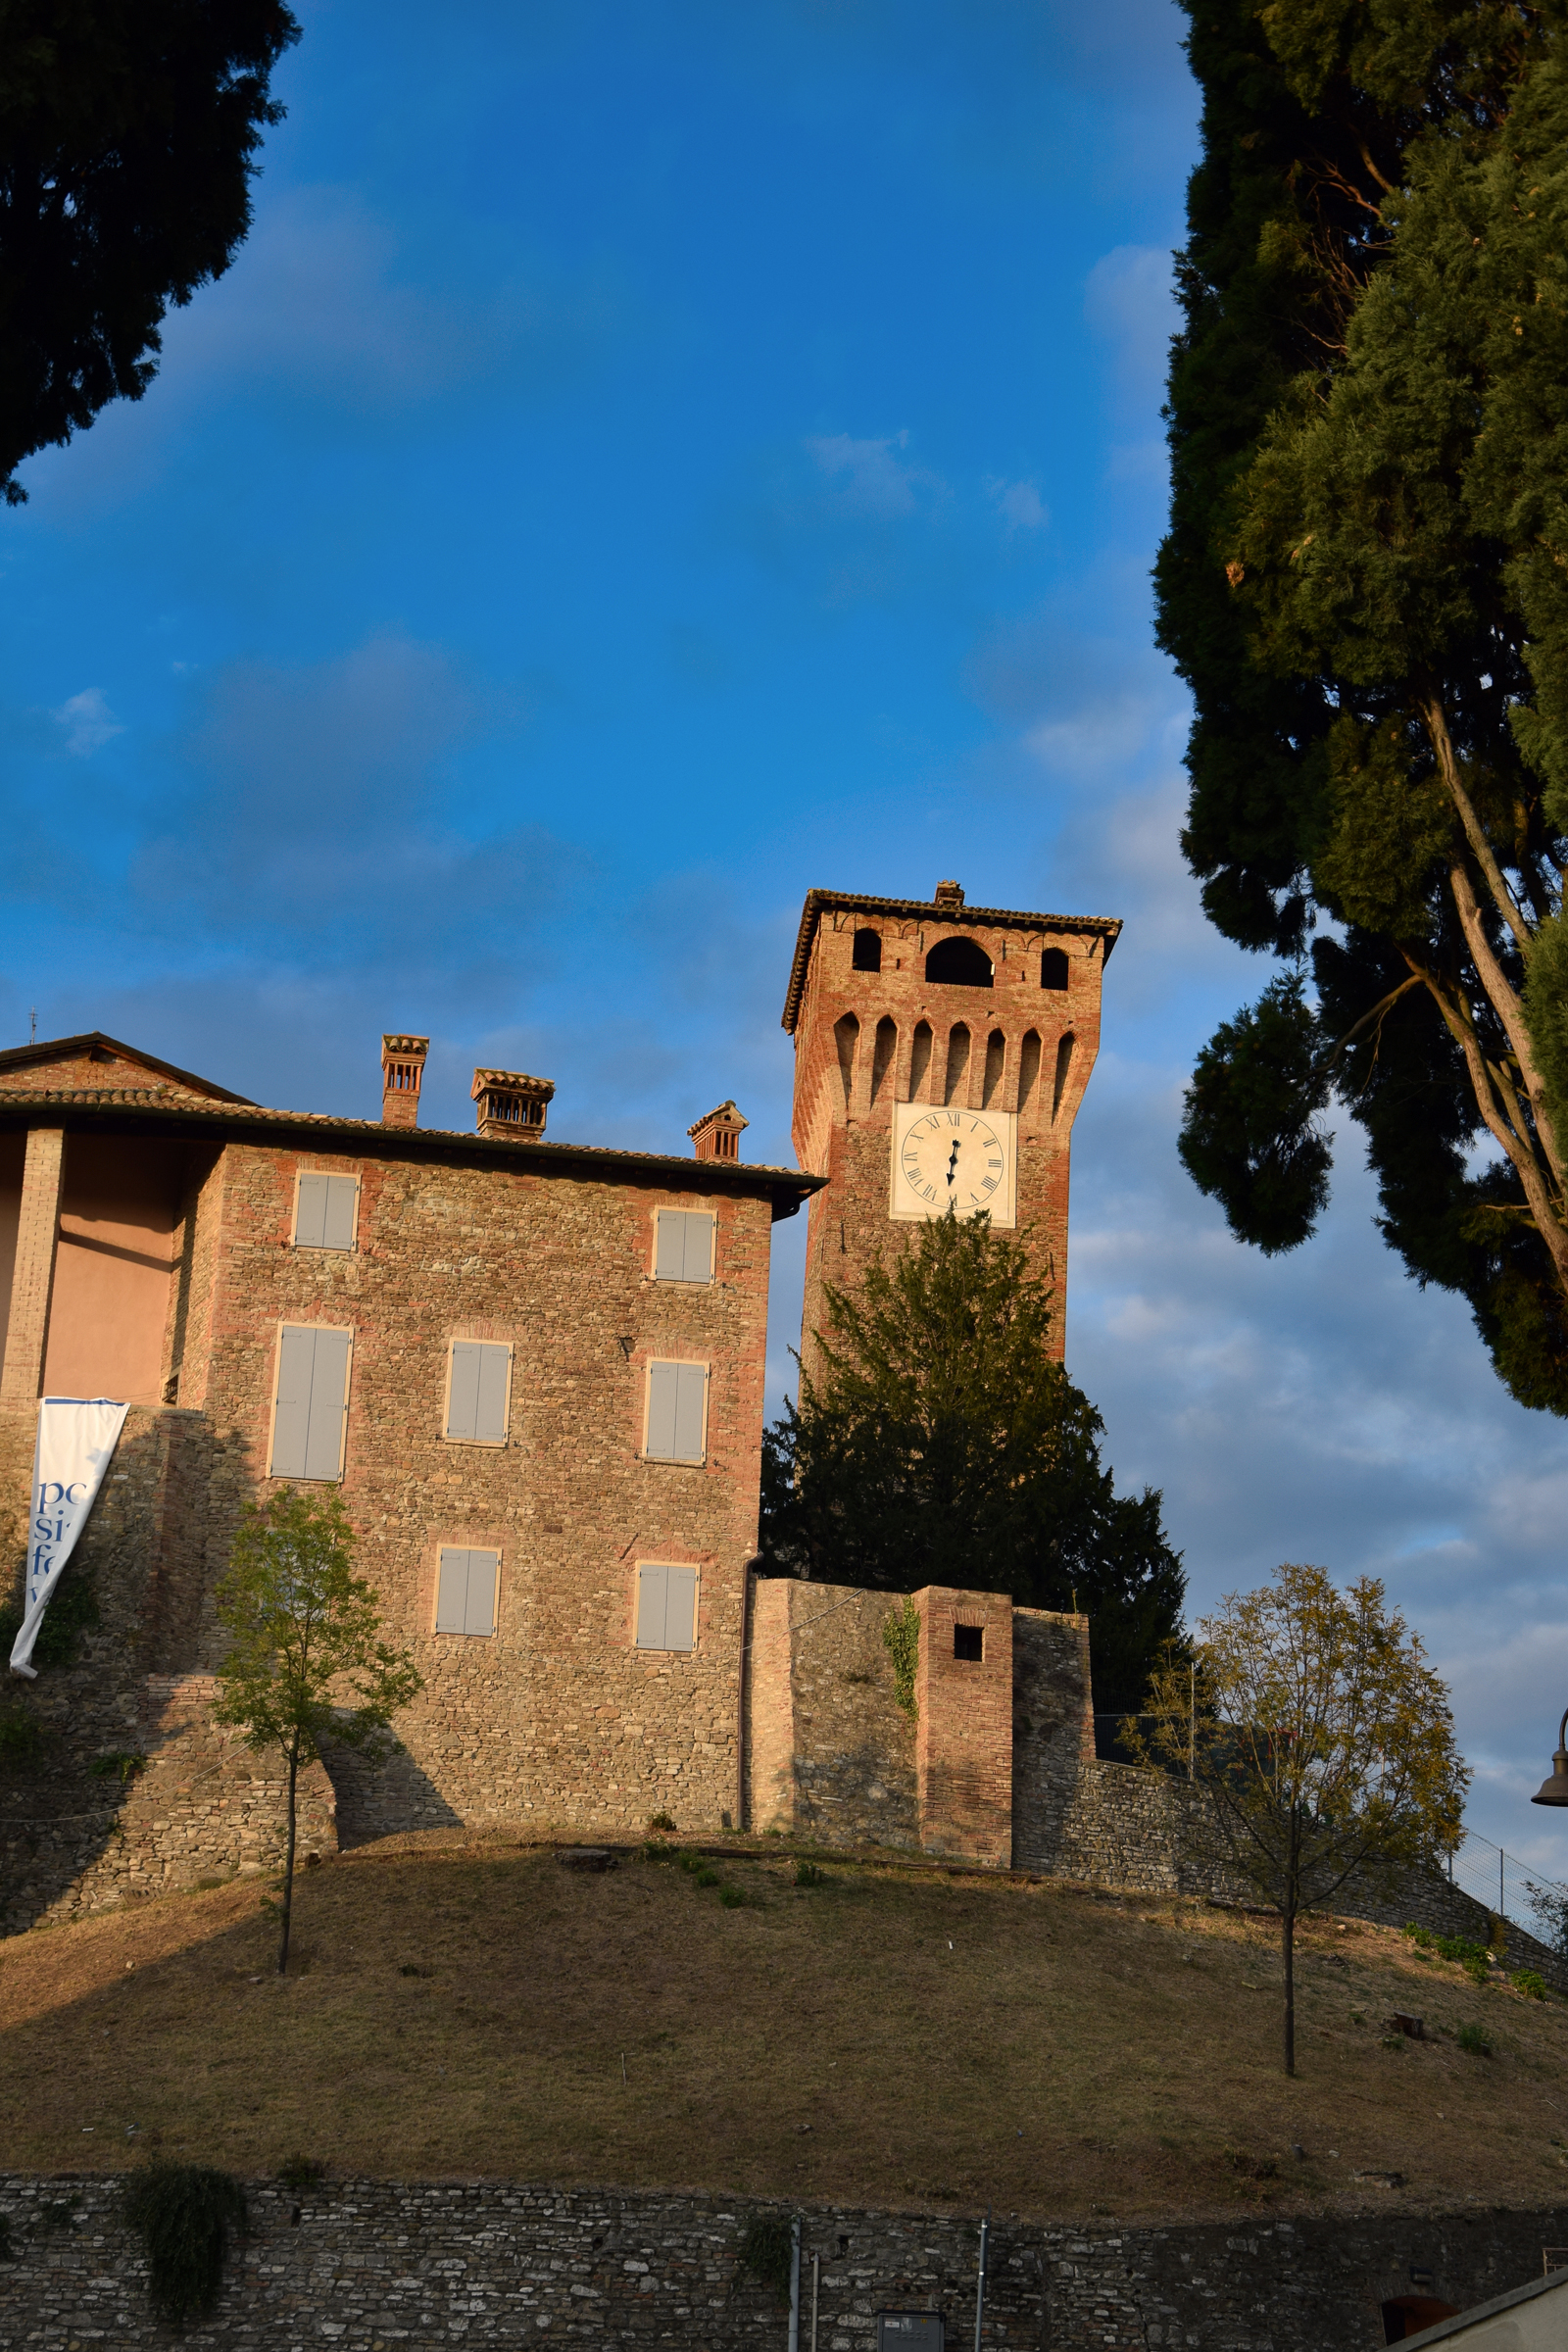 foto: https://upload.wikimedia.org/wikipedia/commons/b/b8/Castello_levizzano.jpg